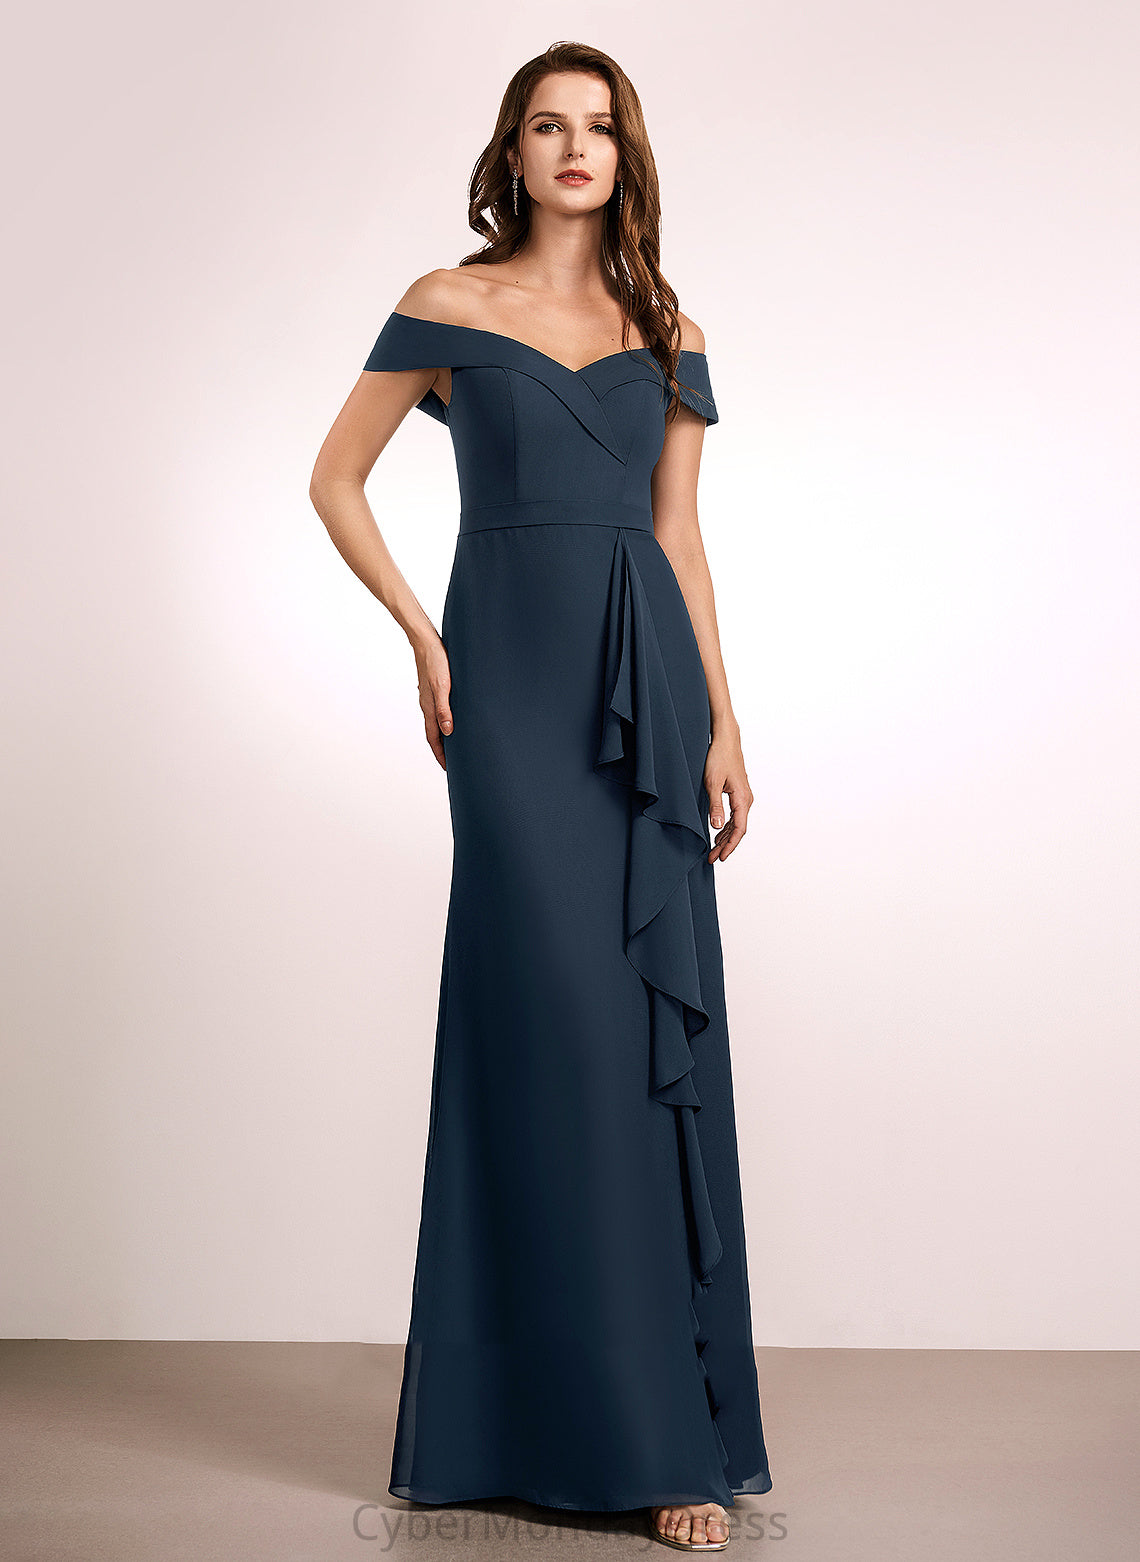 Ruffle Neckline Off-the-Shoulder Floor-Length A-Line Embellishment Silhouette Length Fabric Teresa Natural Waist Sleeveless Bridesmaid Dresses